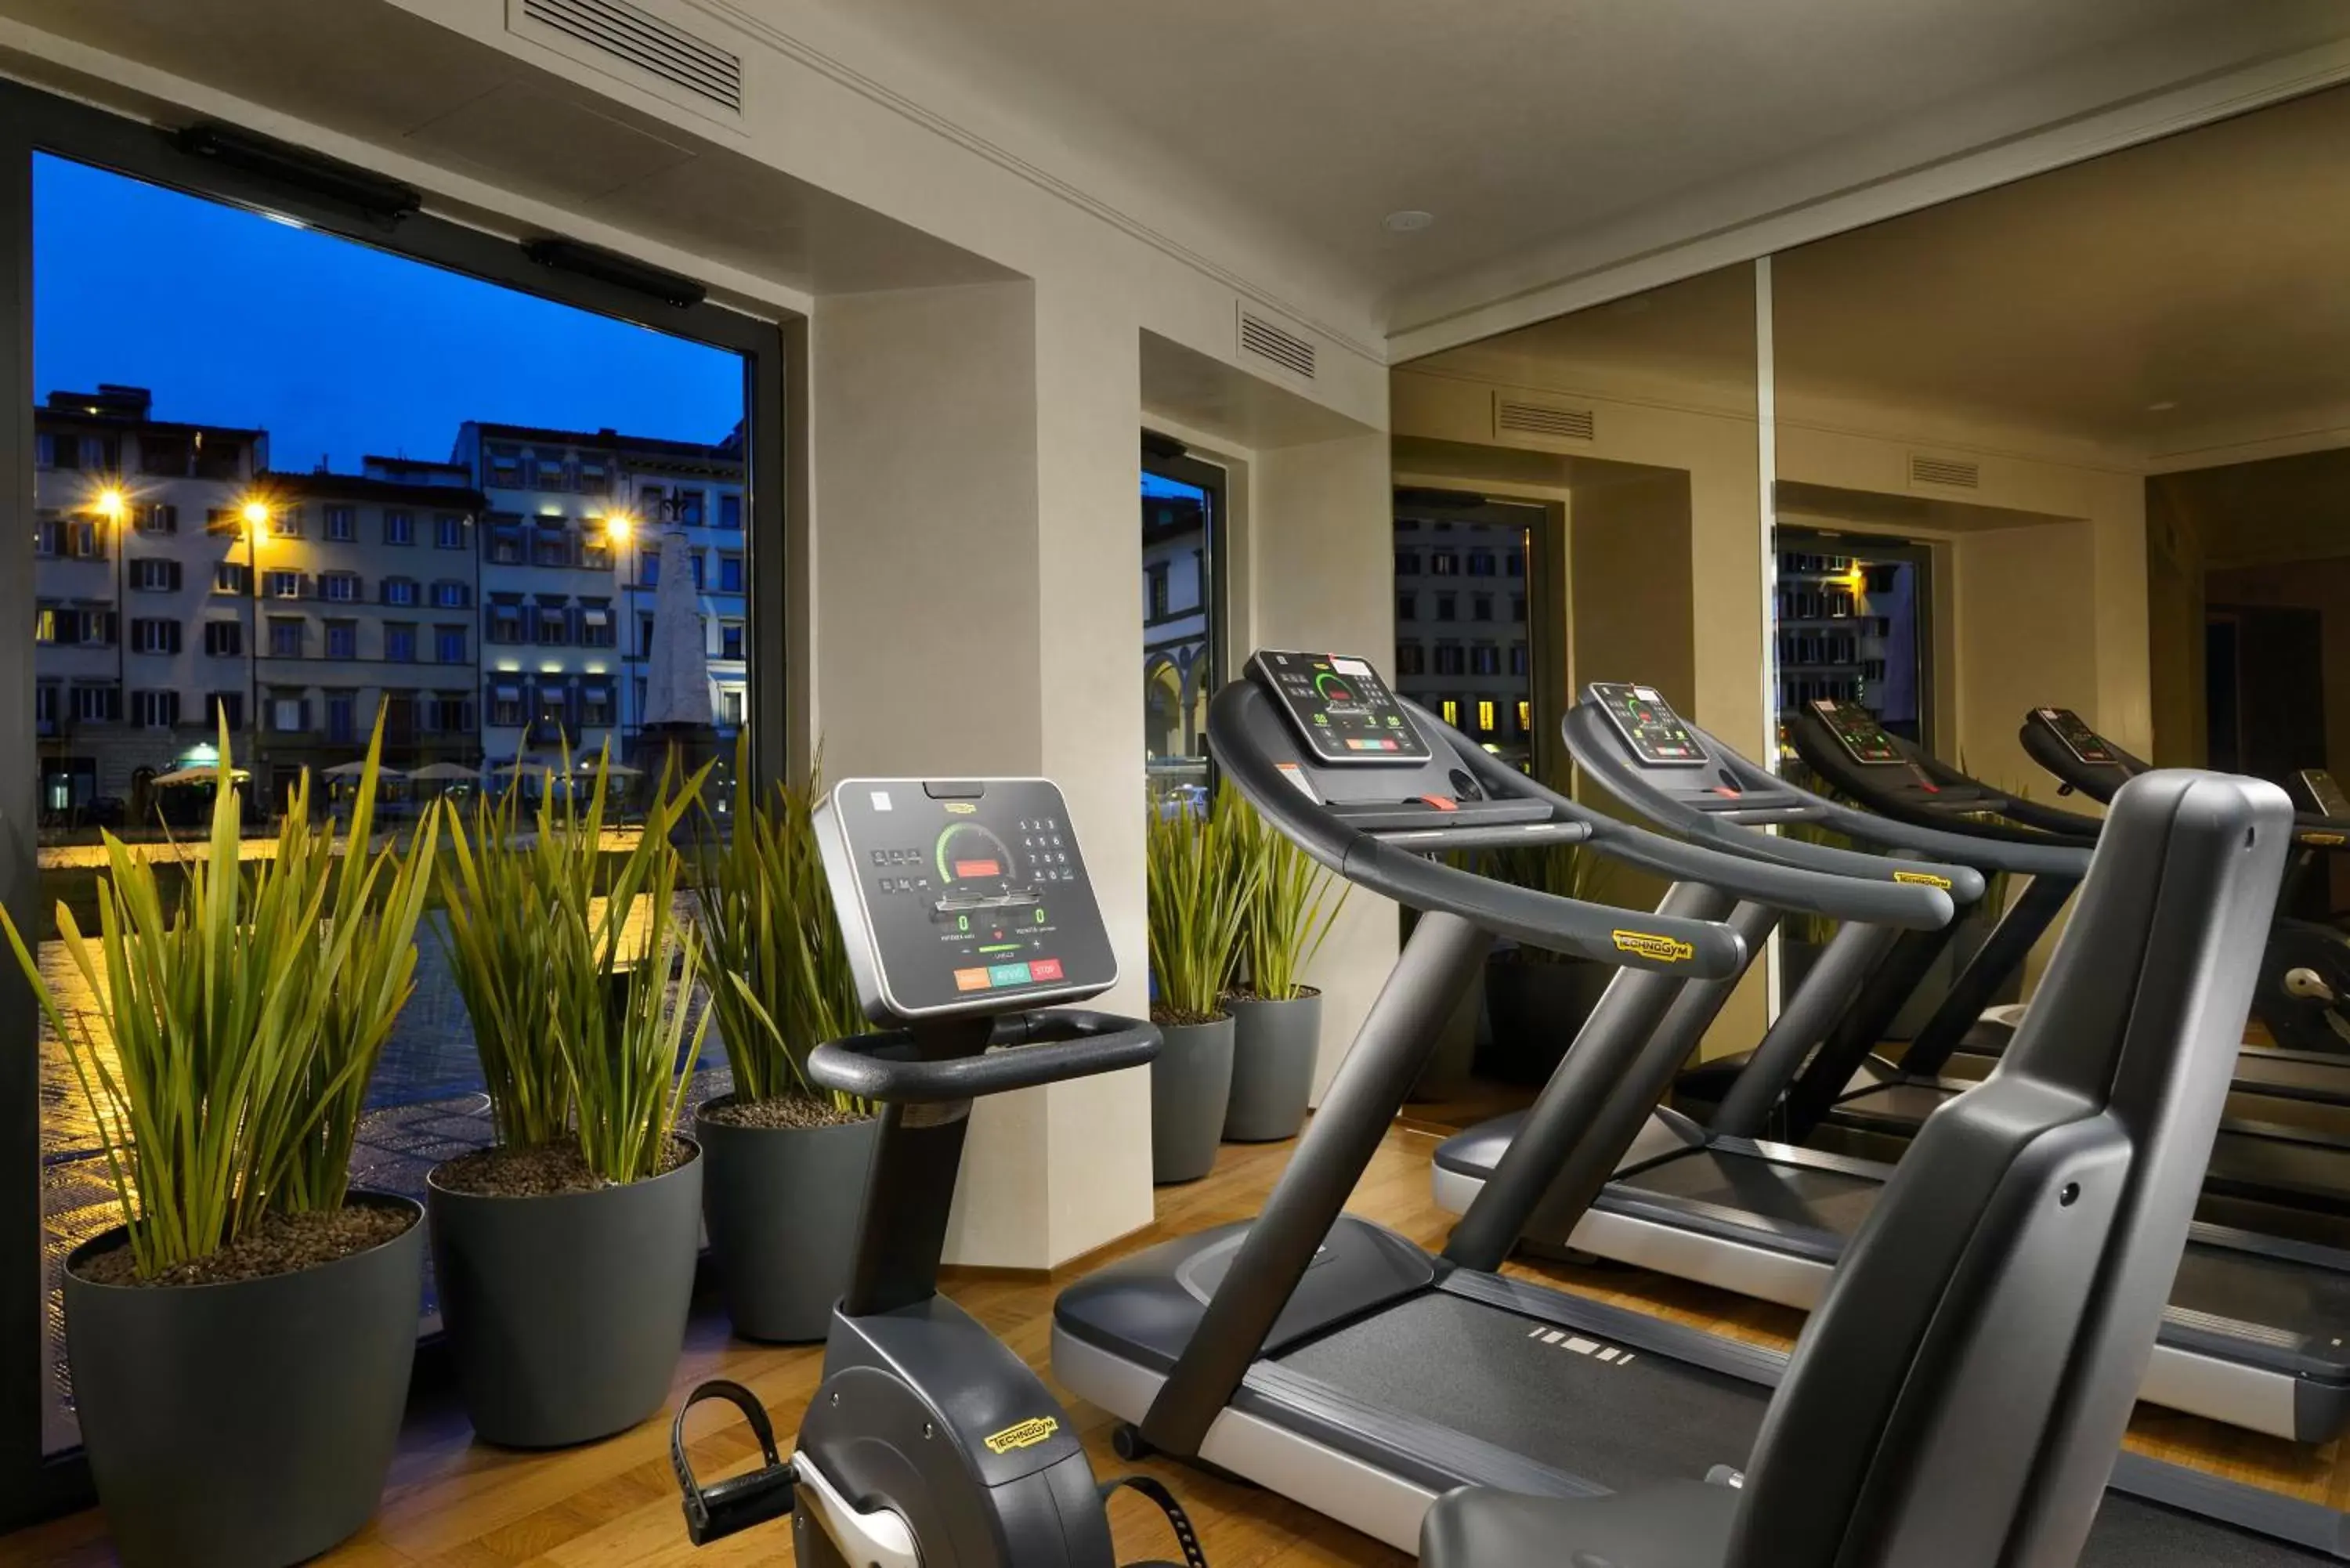 Fitness centre/facilities, Fitness Center/Facilities in Grand Hotel Minerva